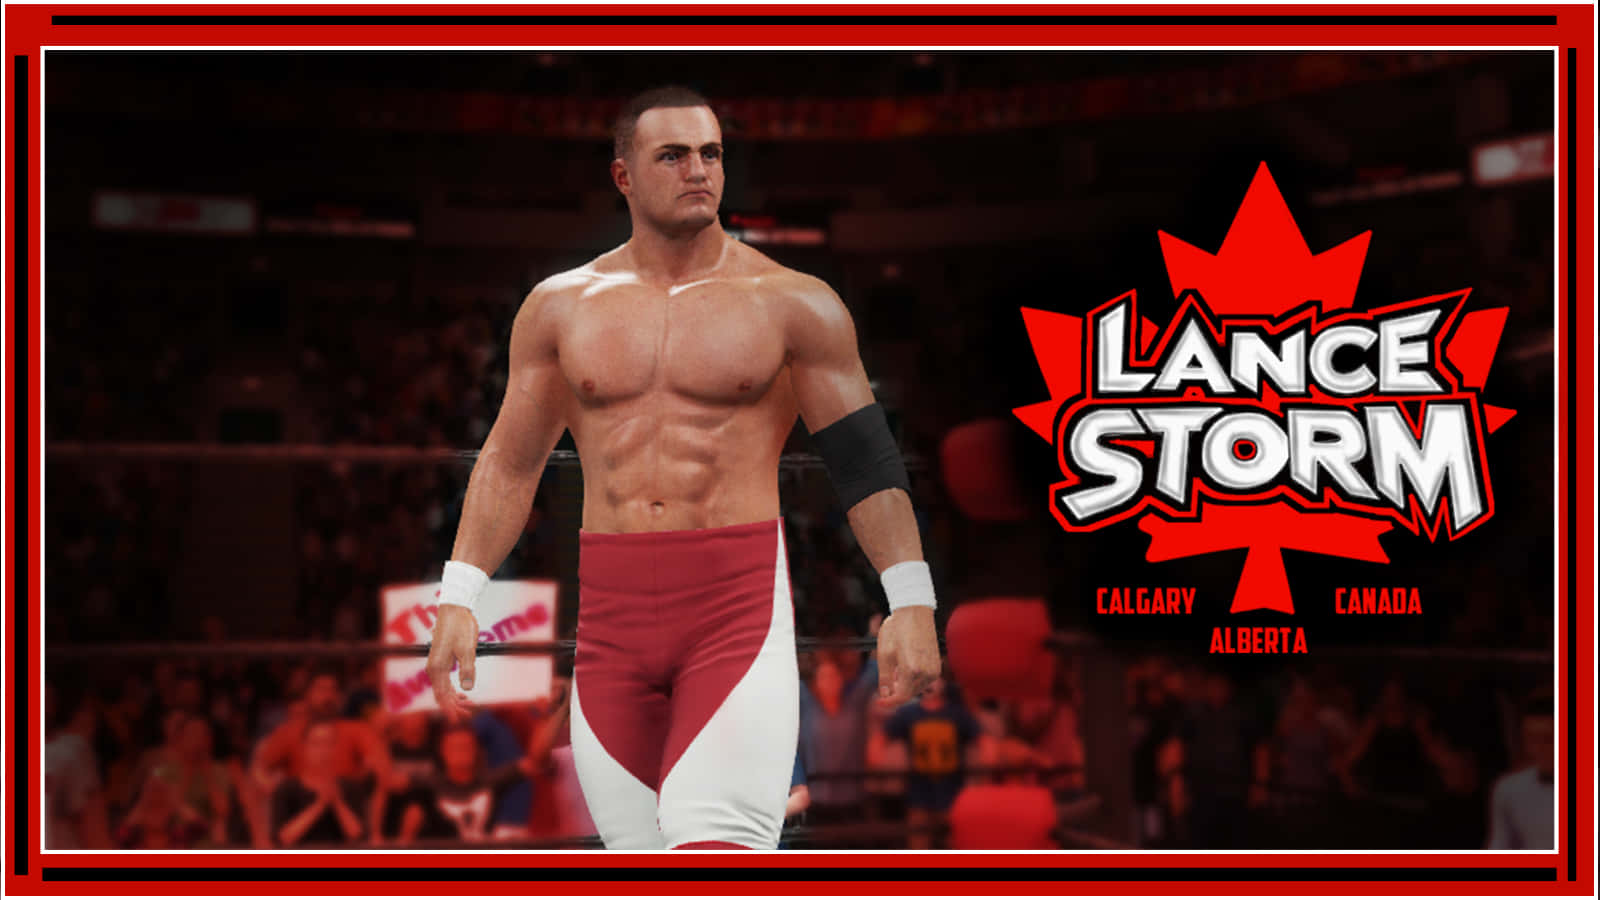 Amazing Canadian Wrestler Lance Storm Digital Poster Wallpaper